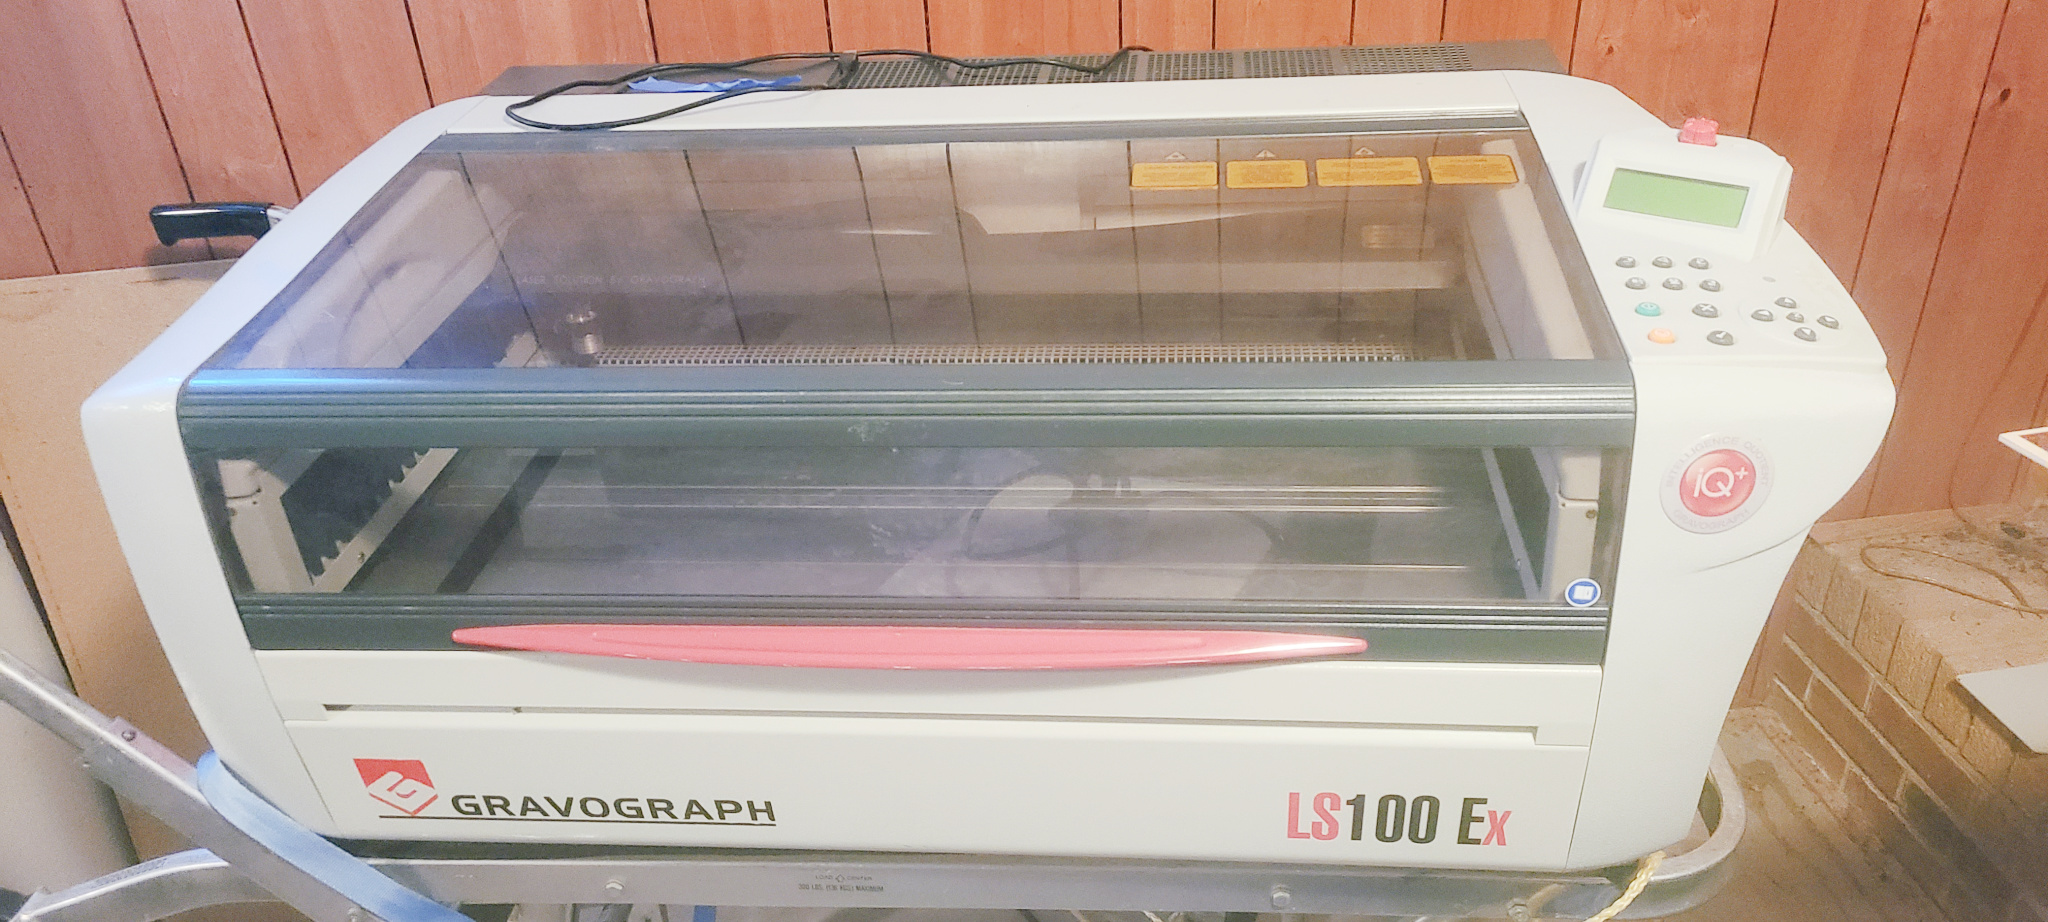 Gravograph LS100EX Laser Engraver (used) Item # UE-102122A